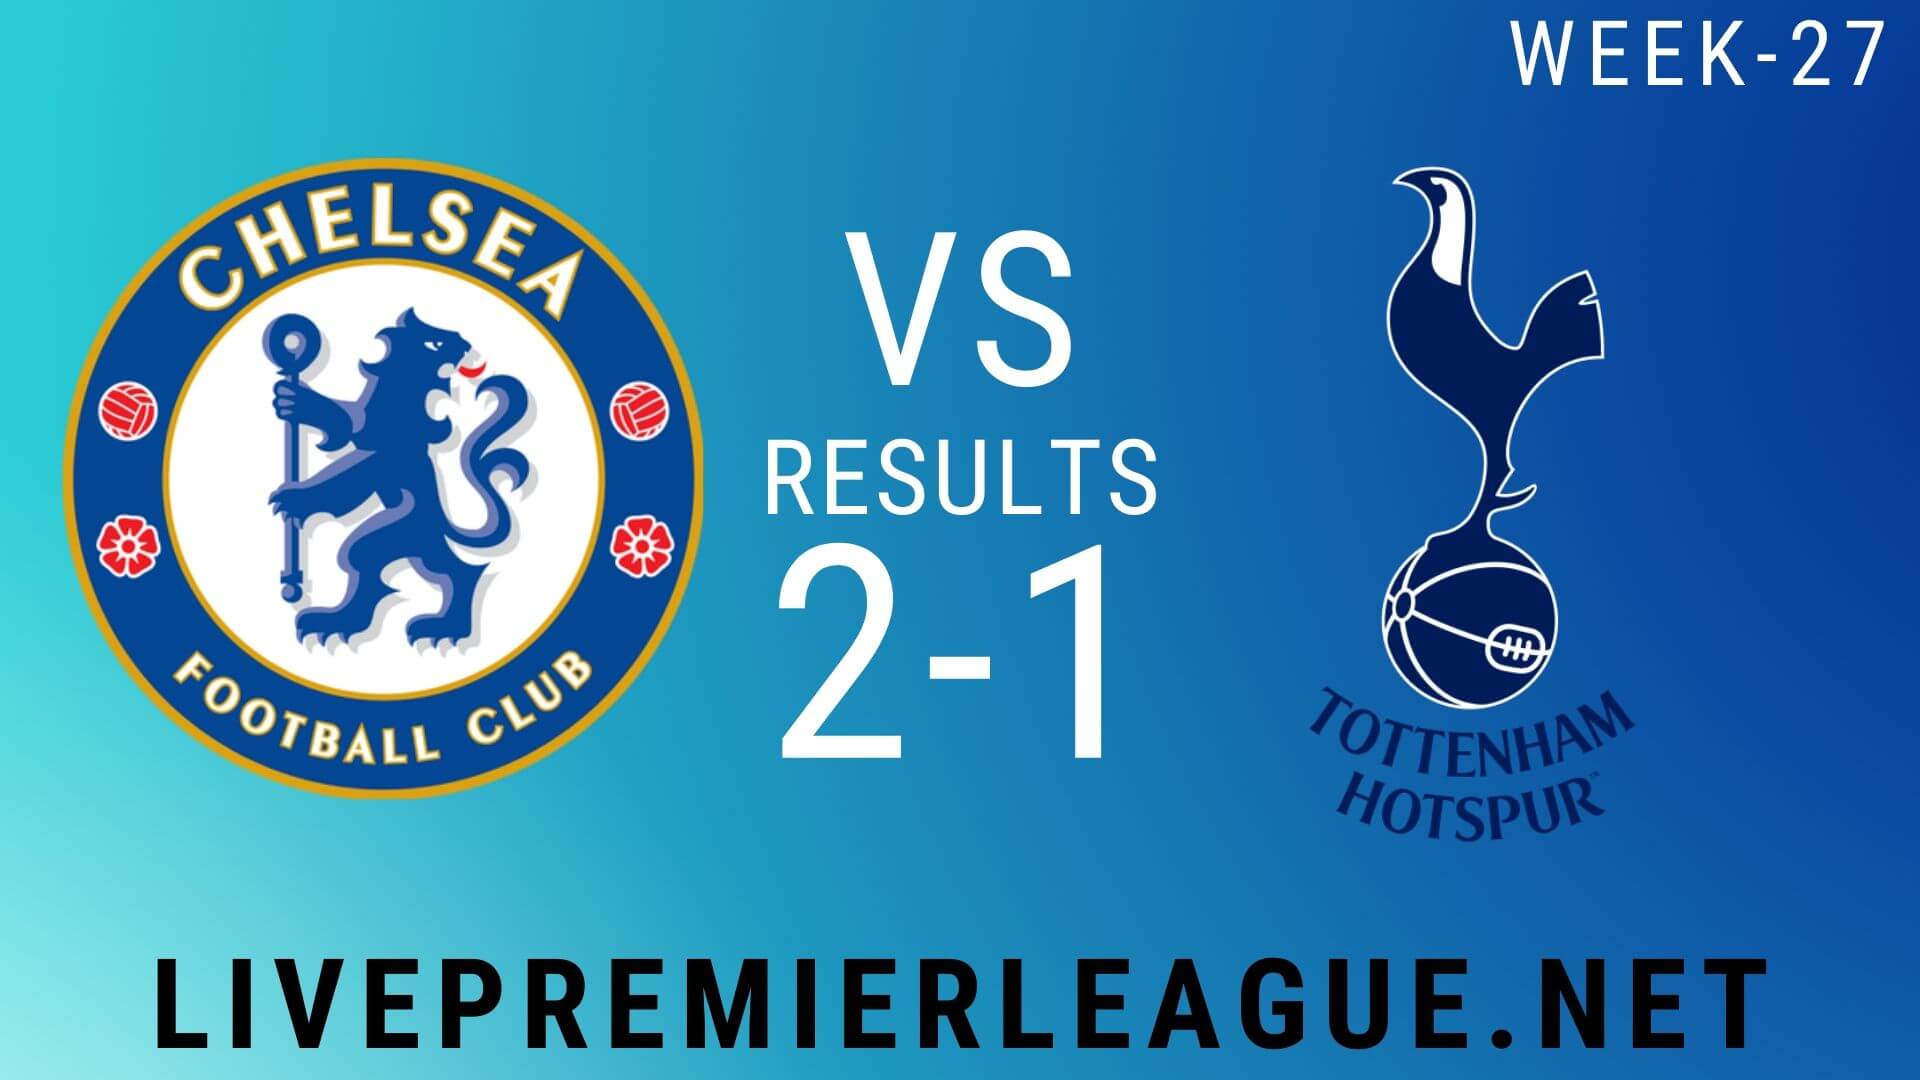 Chelsea Vs Tottenham Hotspur | Week 27 Result 2020